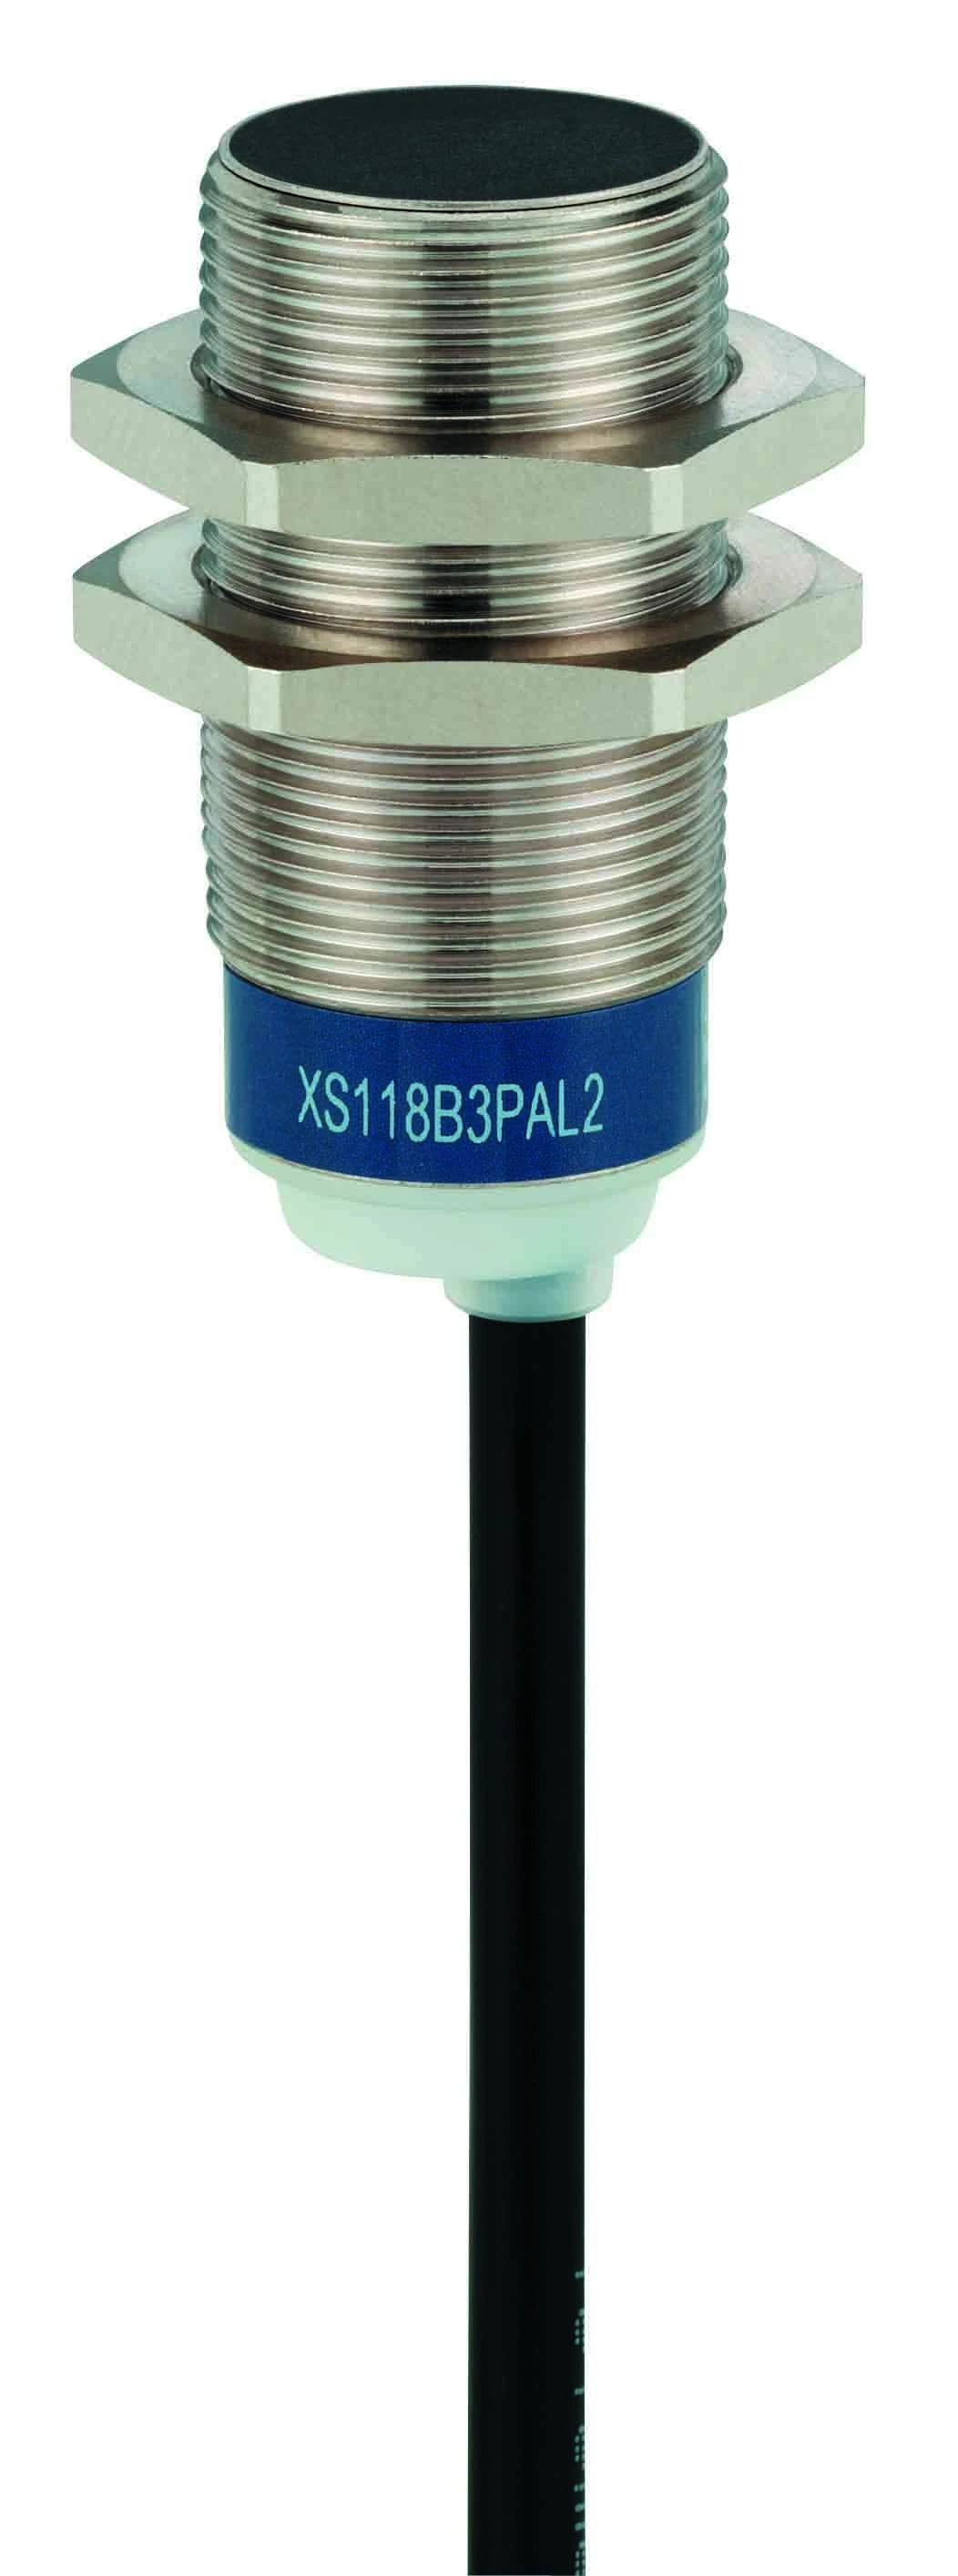  артикул XS118B3PAL2 название SE Датчик индуктивный цилиндрический M18 12 24ВDC